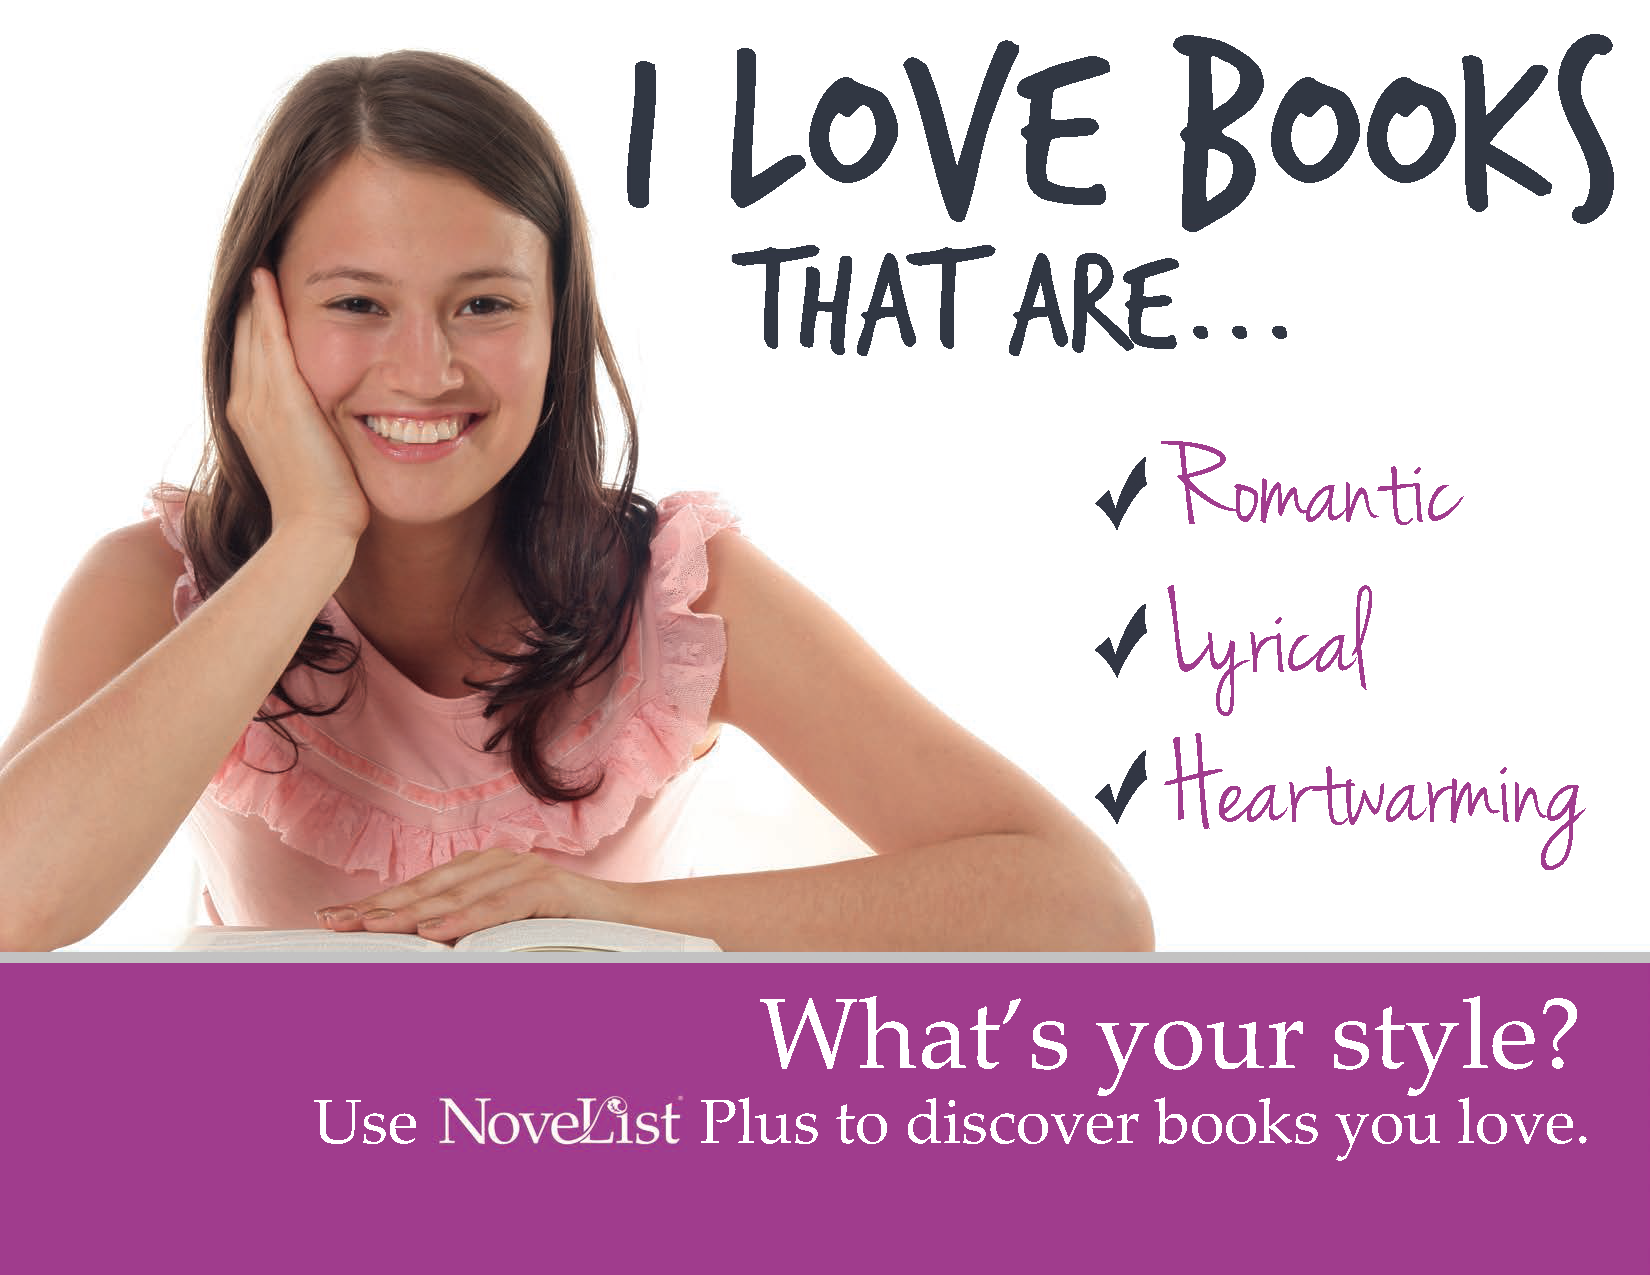 novelist_plus_flyer_ilovebooks_romantic